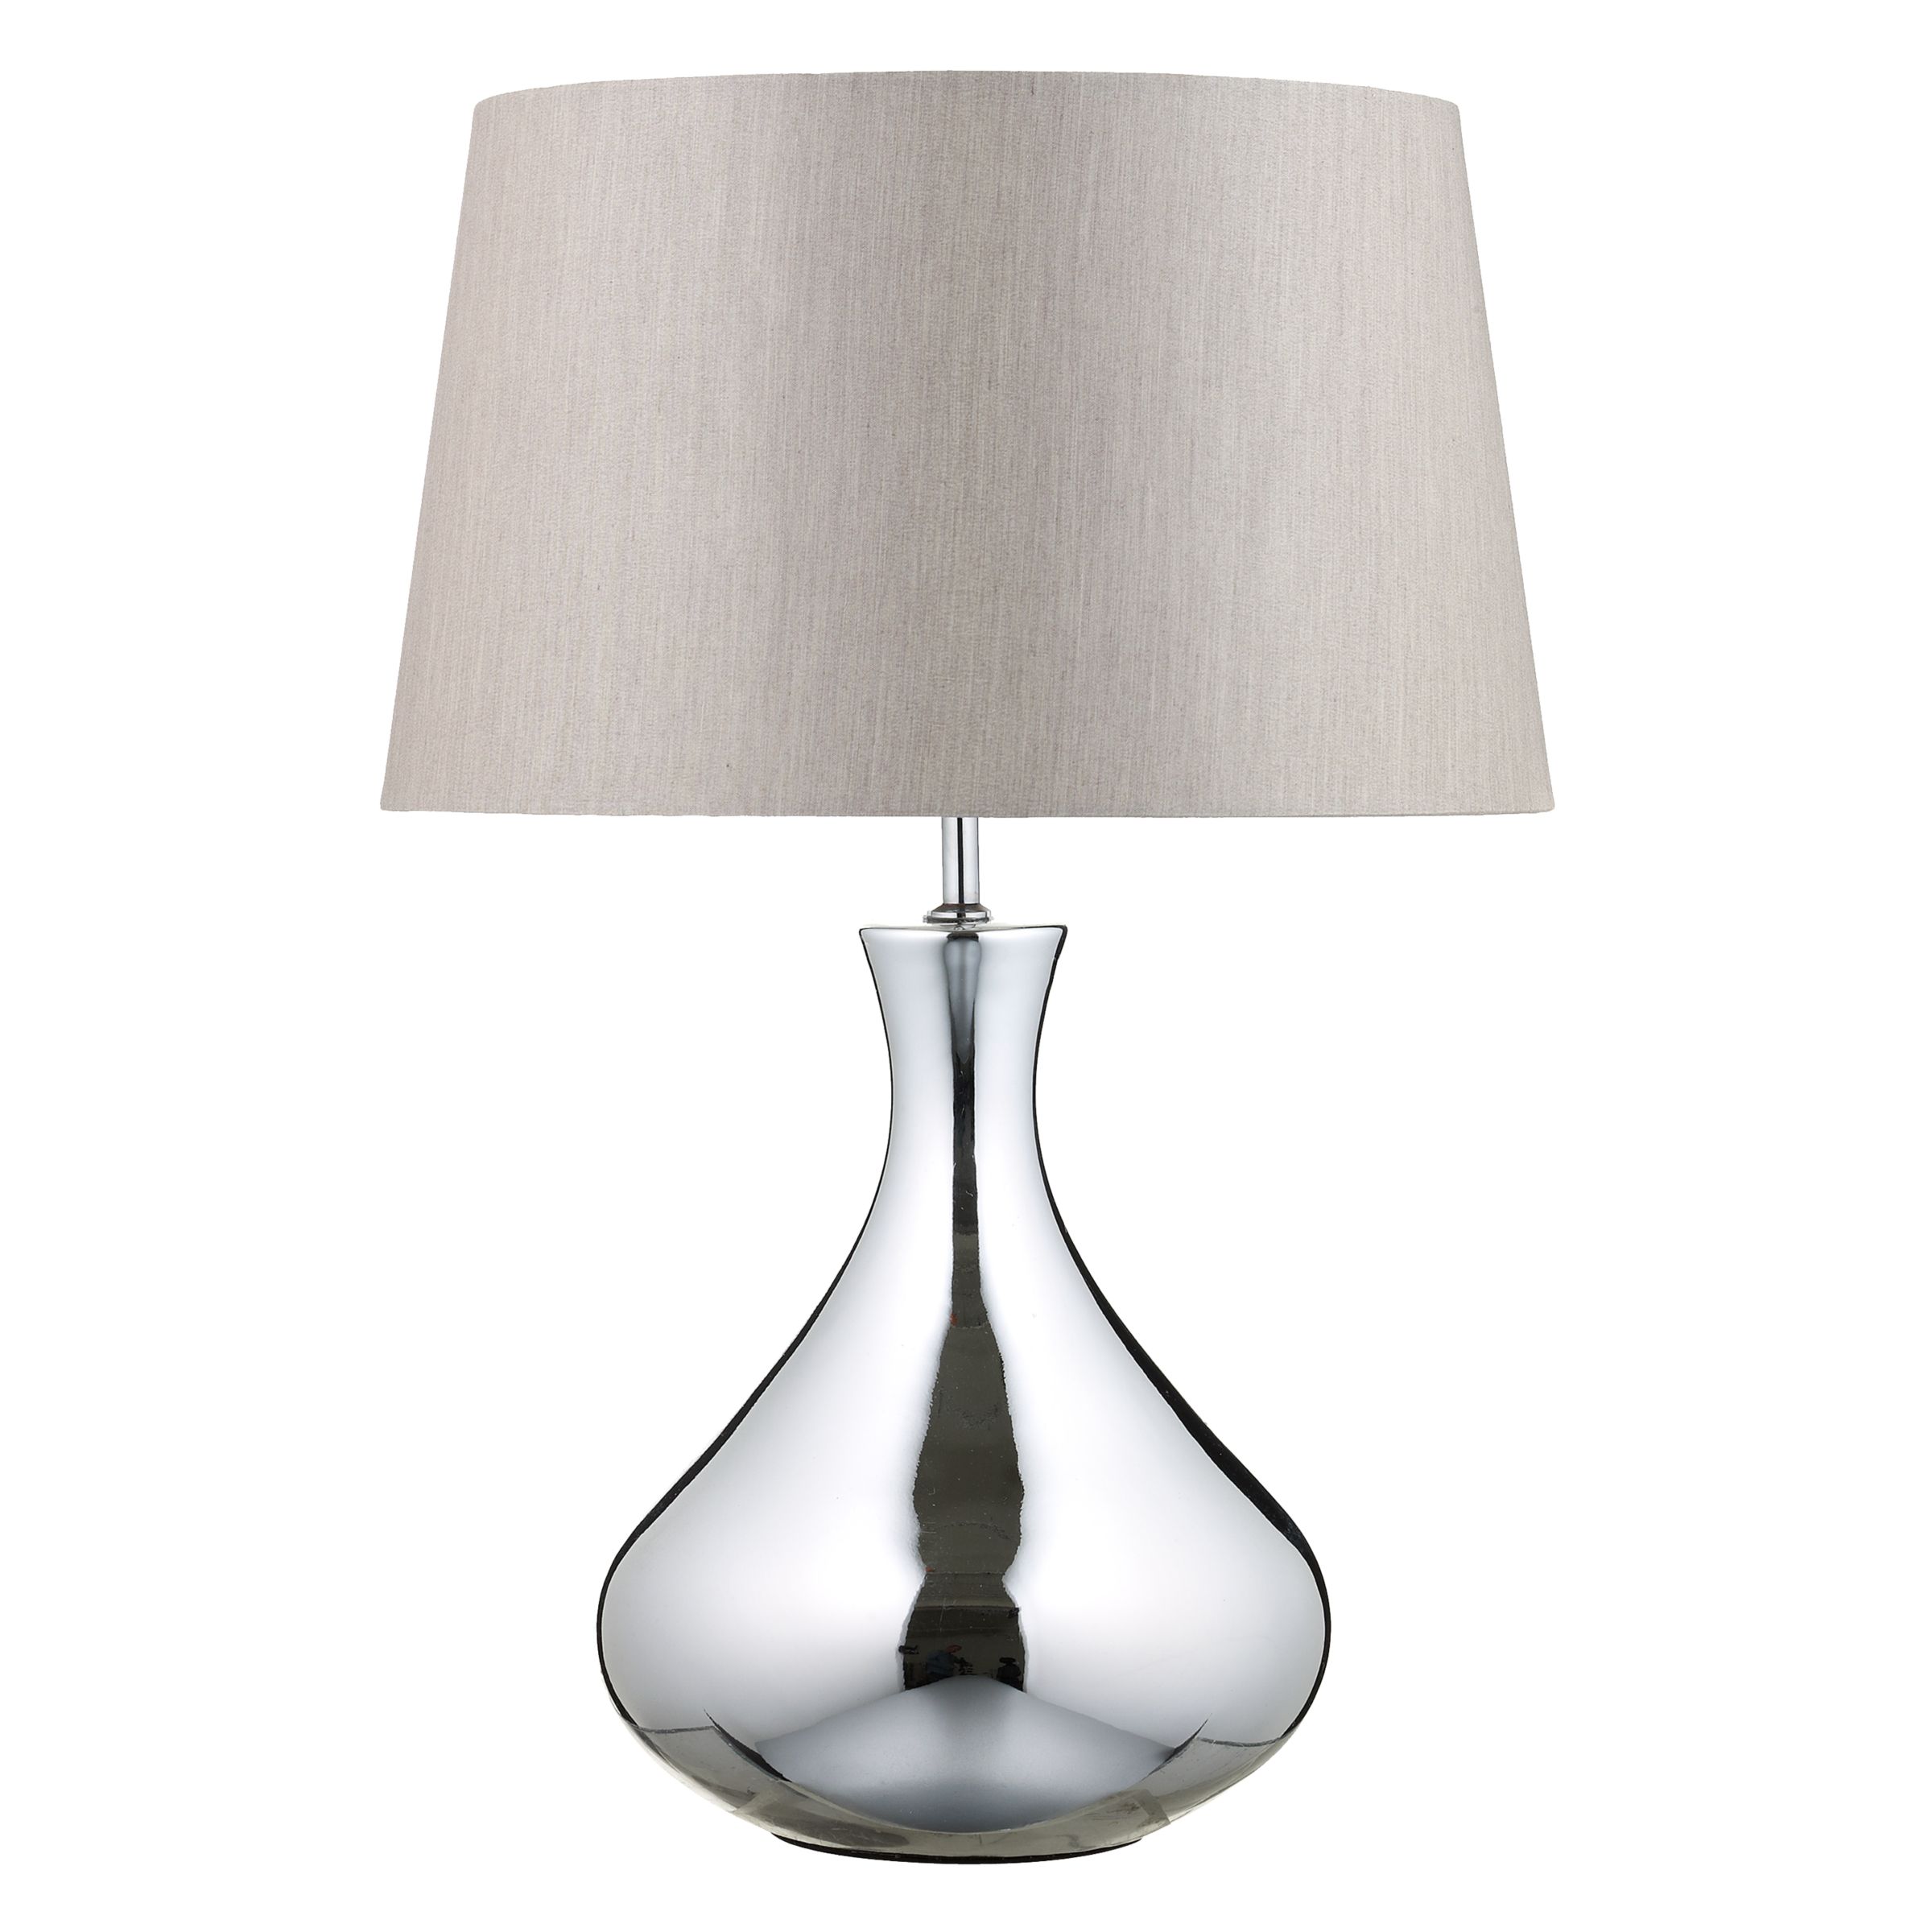 John Lewis Sonia Table Lamp 153732